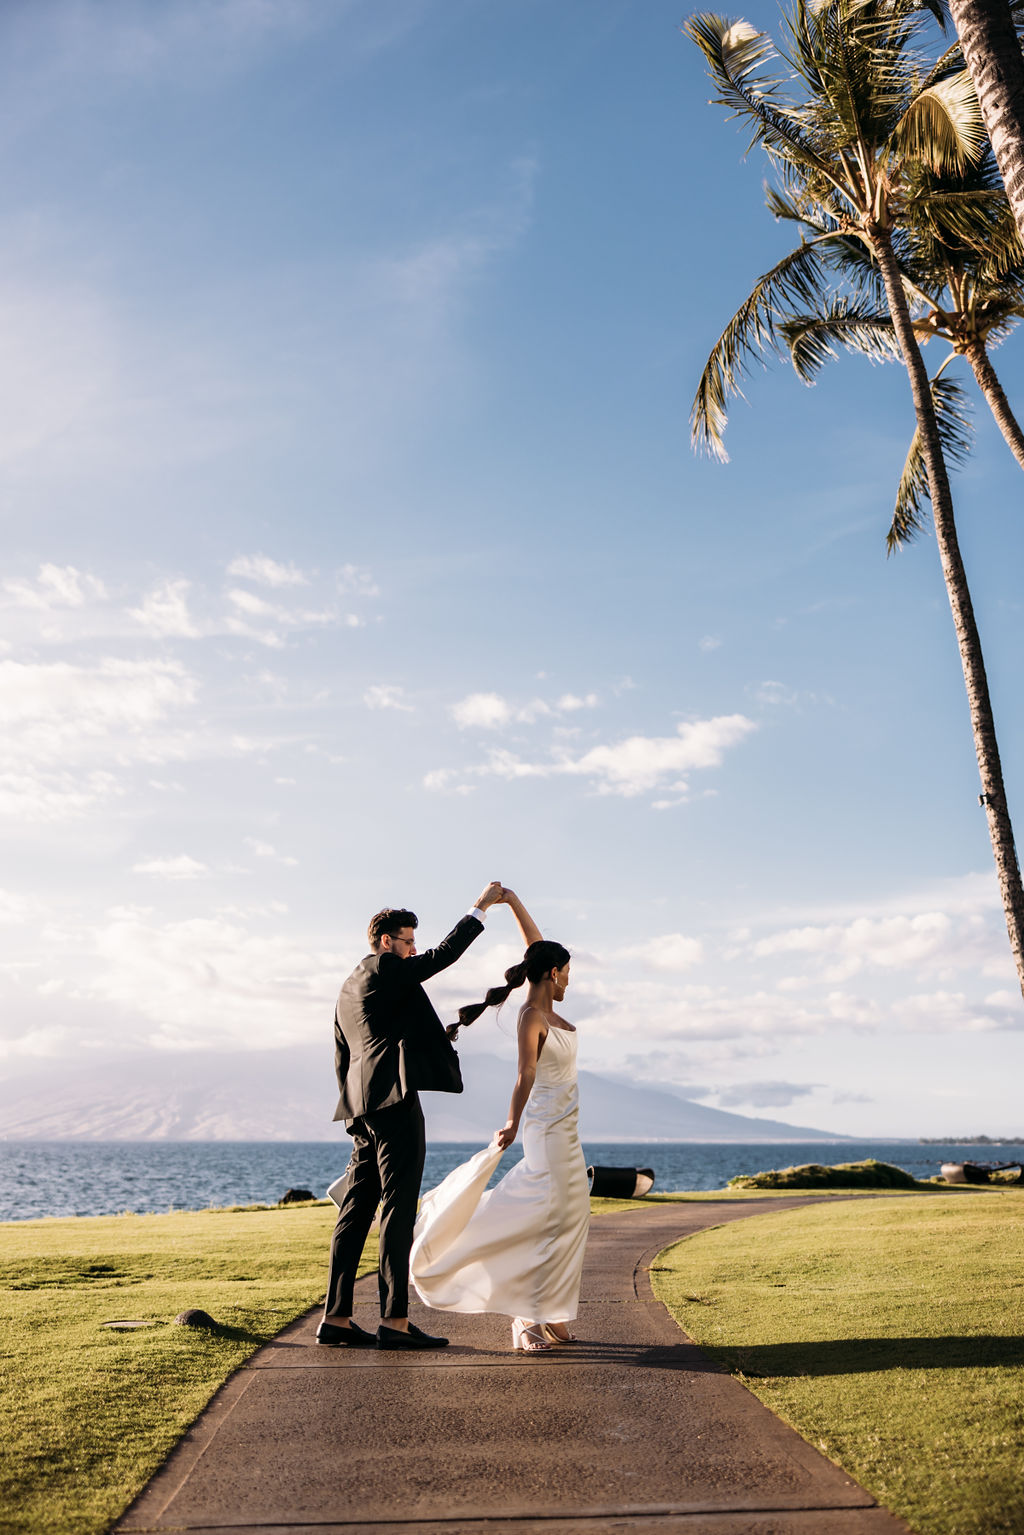 Real-wedding-helena-david-hawaii-post-ceremony-portrait-bride-and-groom-dancing